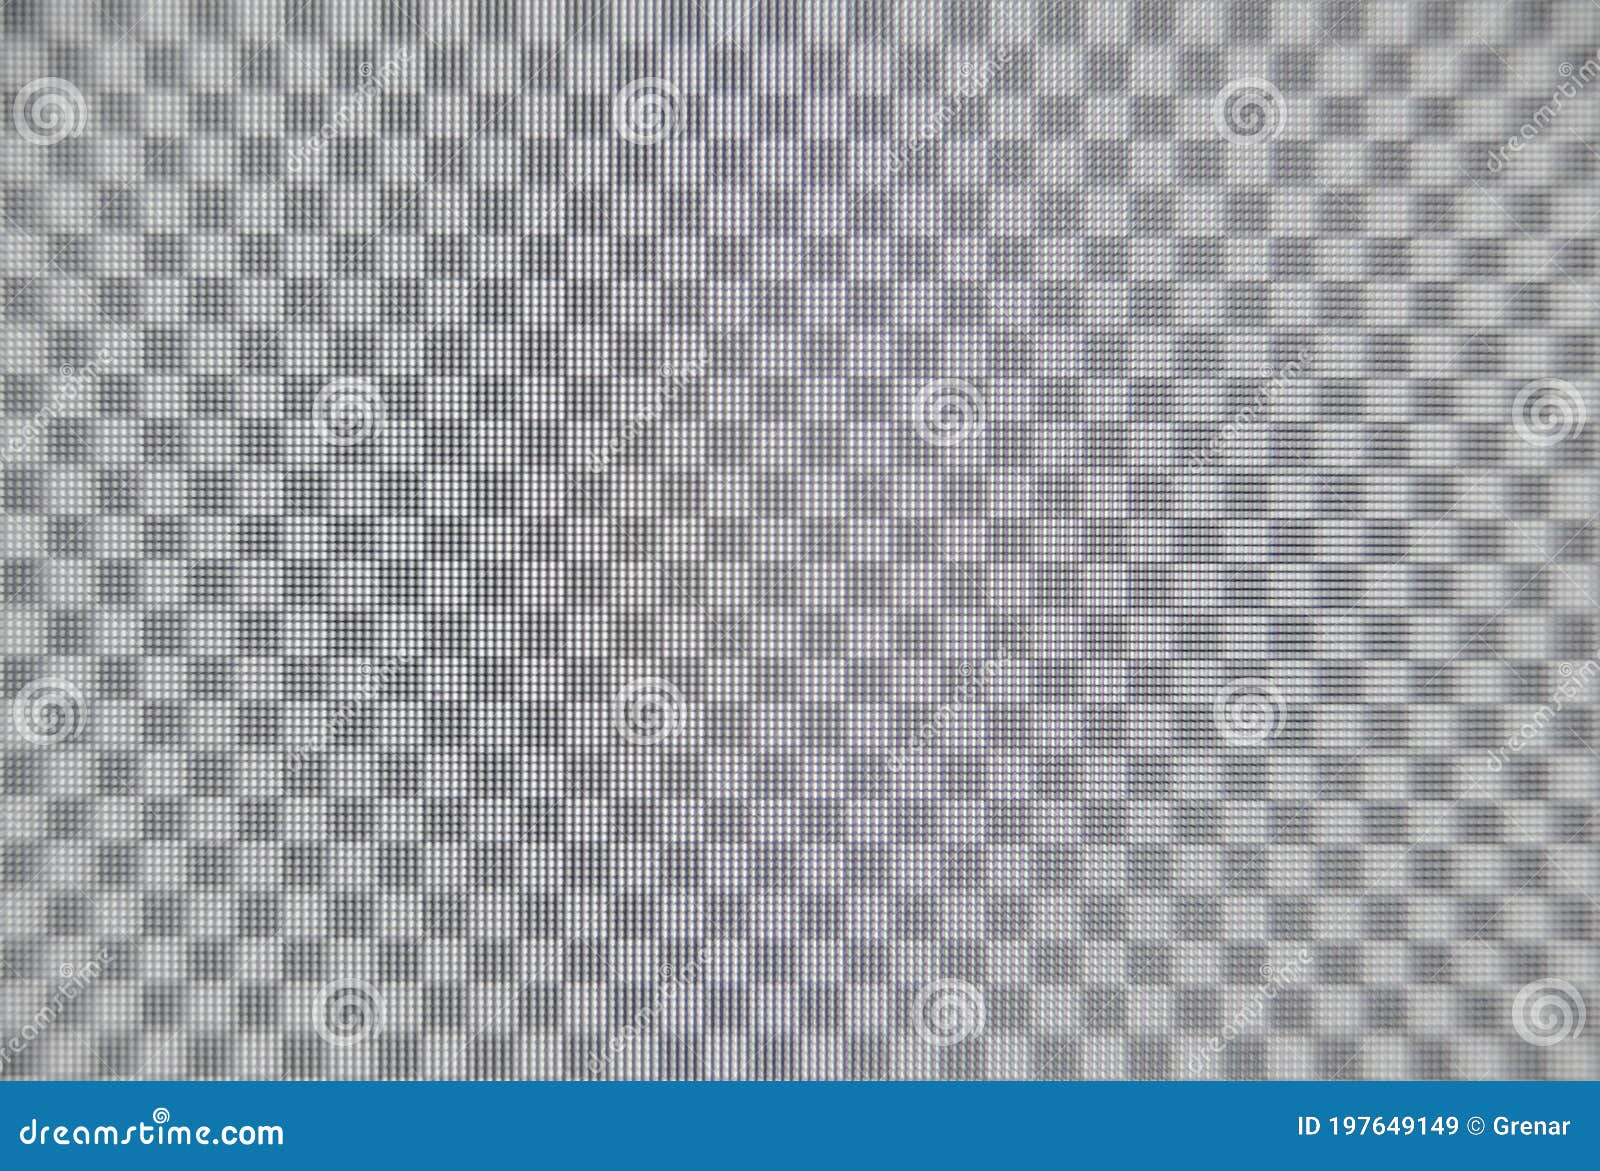 lcd screen texture ov checkered small